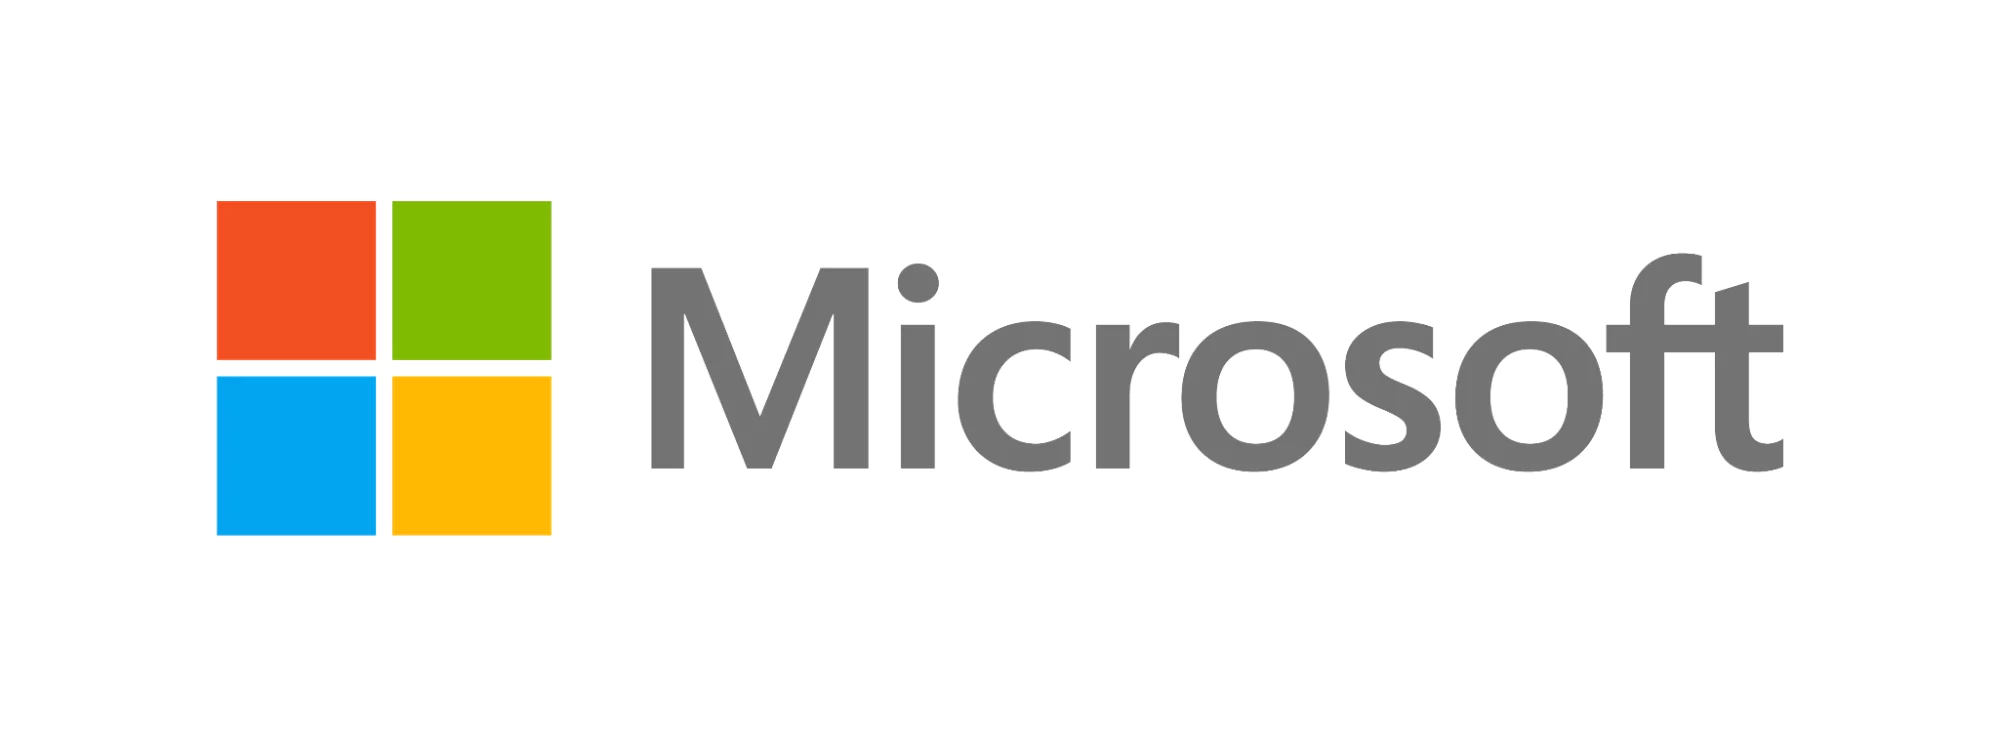 Microsoft 로고, 파란색, 녹색, 노란색 및 빨간색의 XNUMX개 창 색상 창